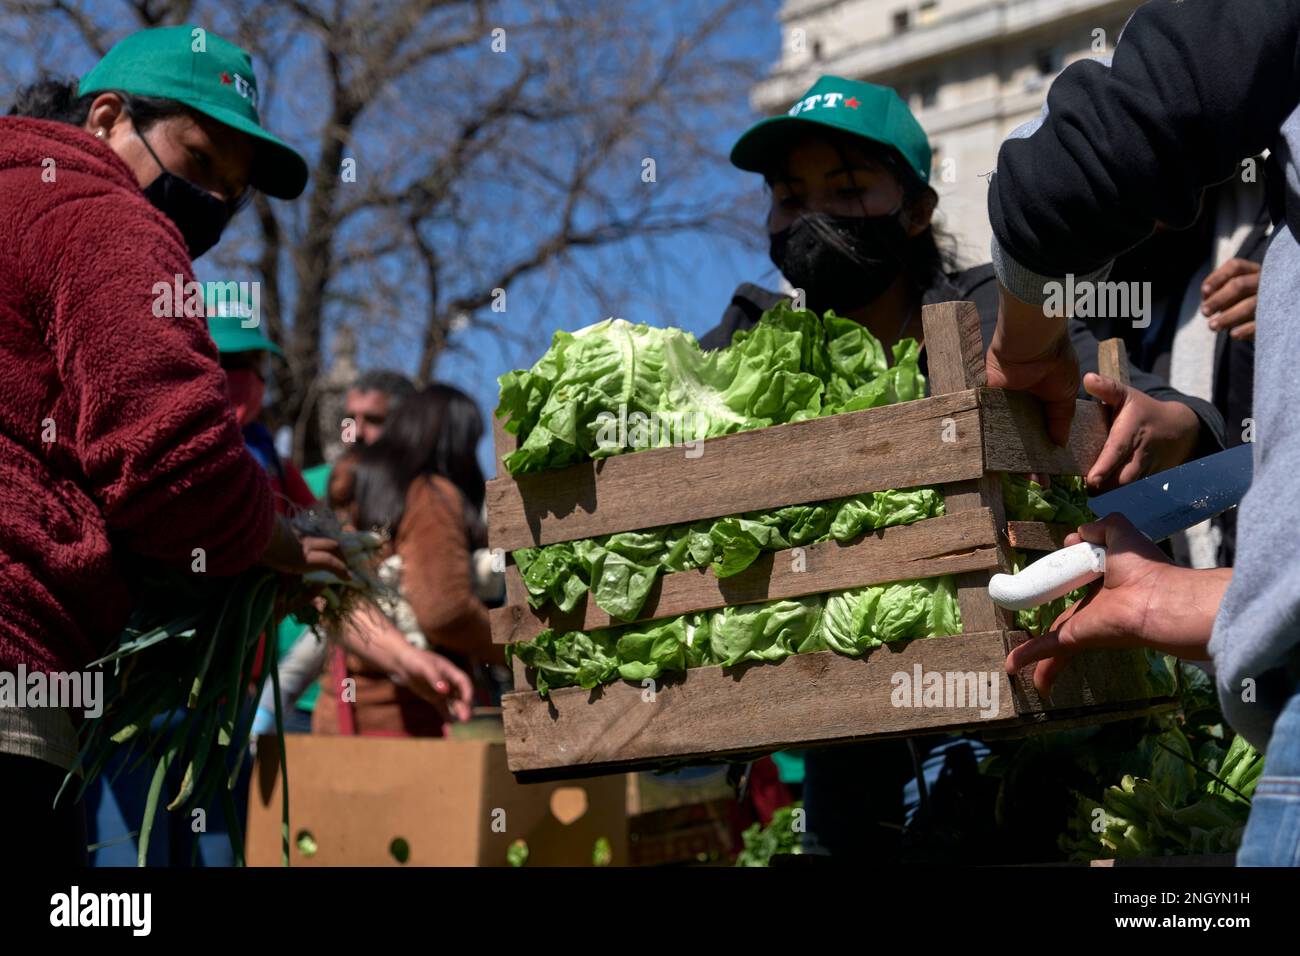 Buenos Aires, Argentina, 21 sept, 2021: UTT, Union de Trabajadores de la Tierra, Land Workers Union, distribute free organic food, fruits and vegetabl Stock Photo